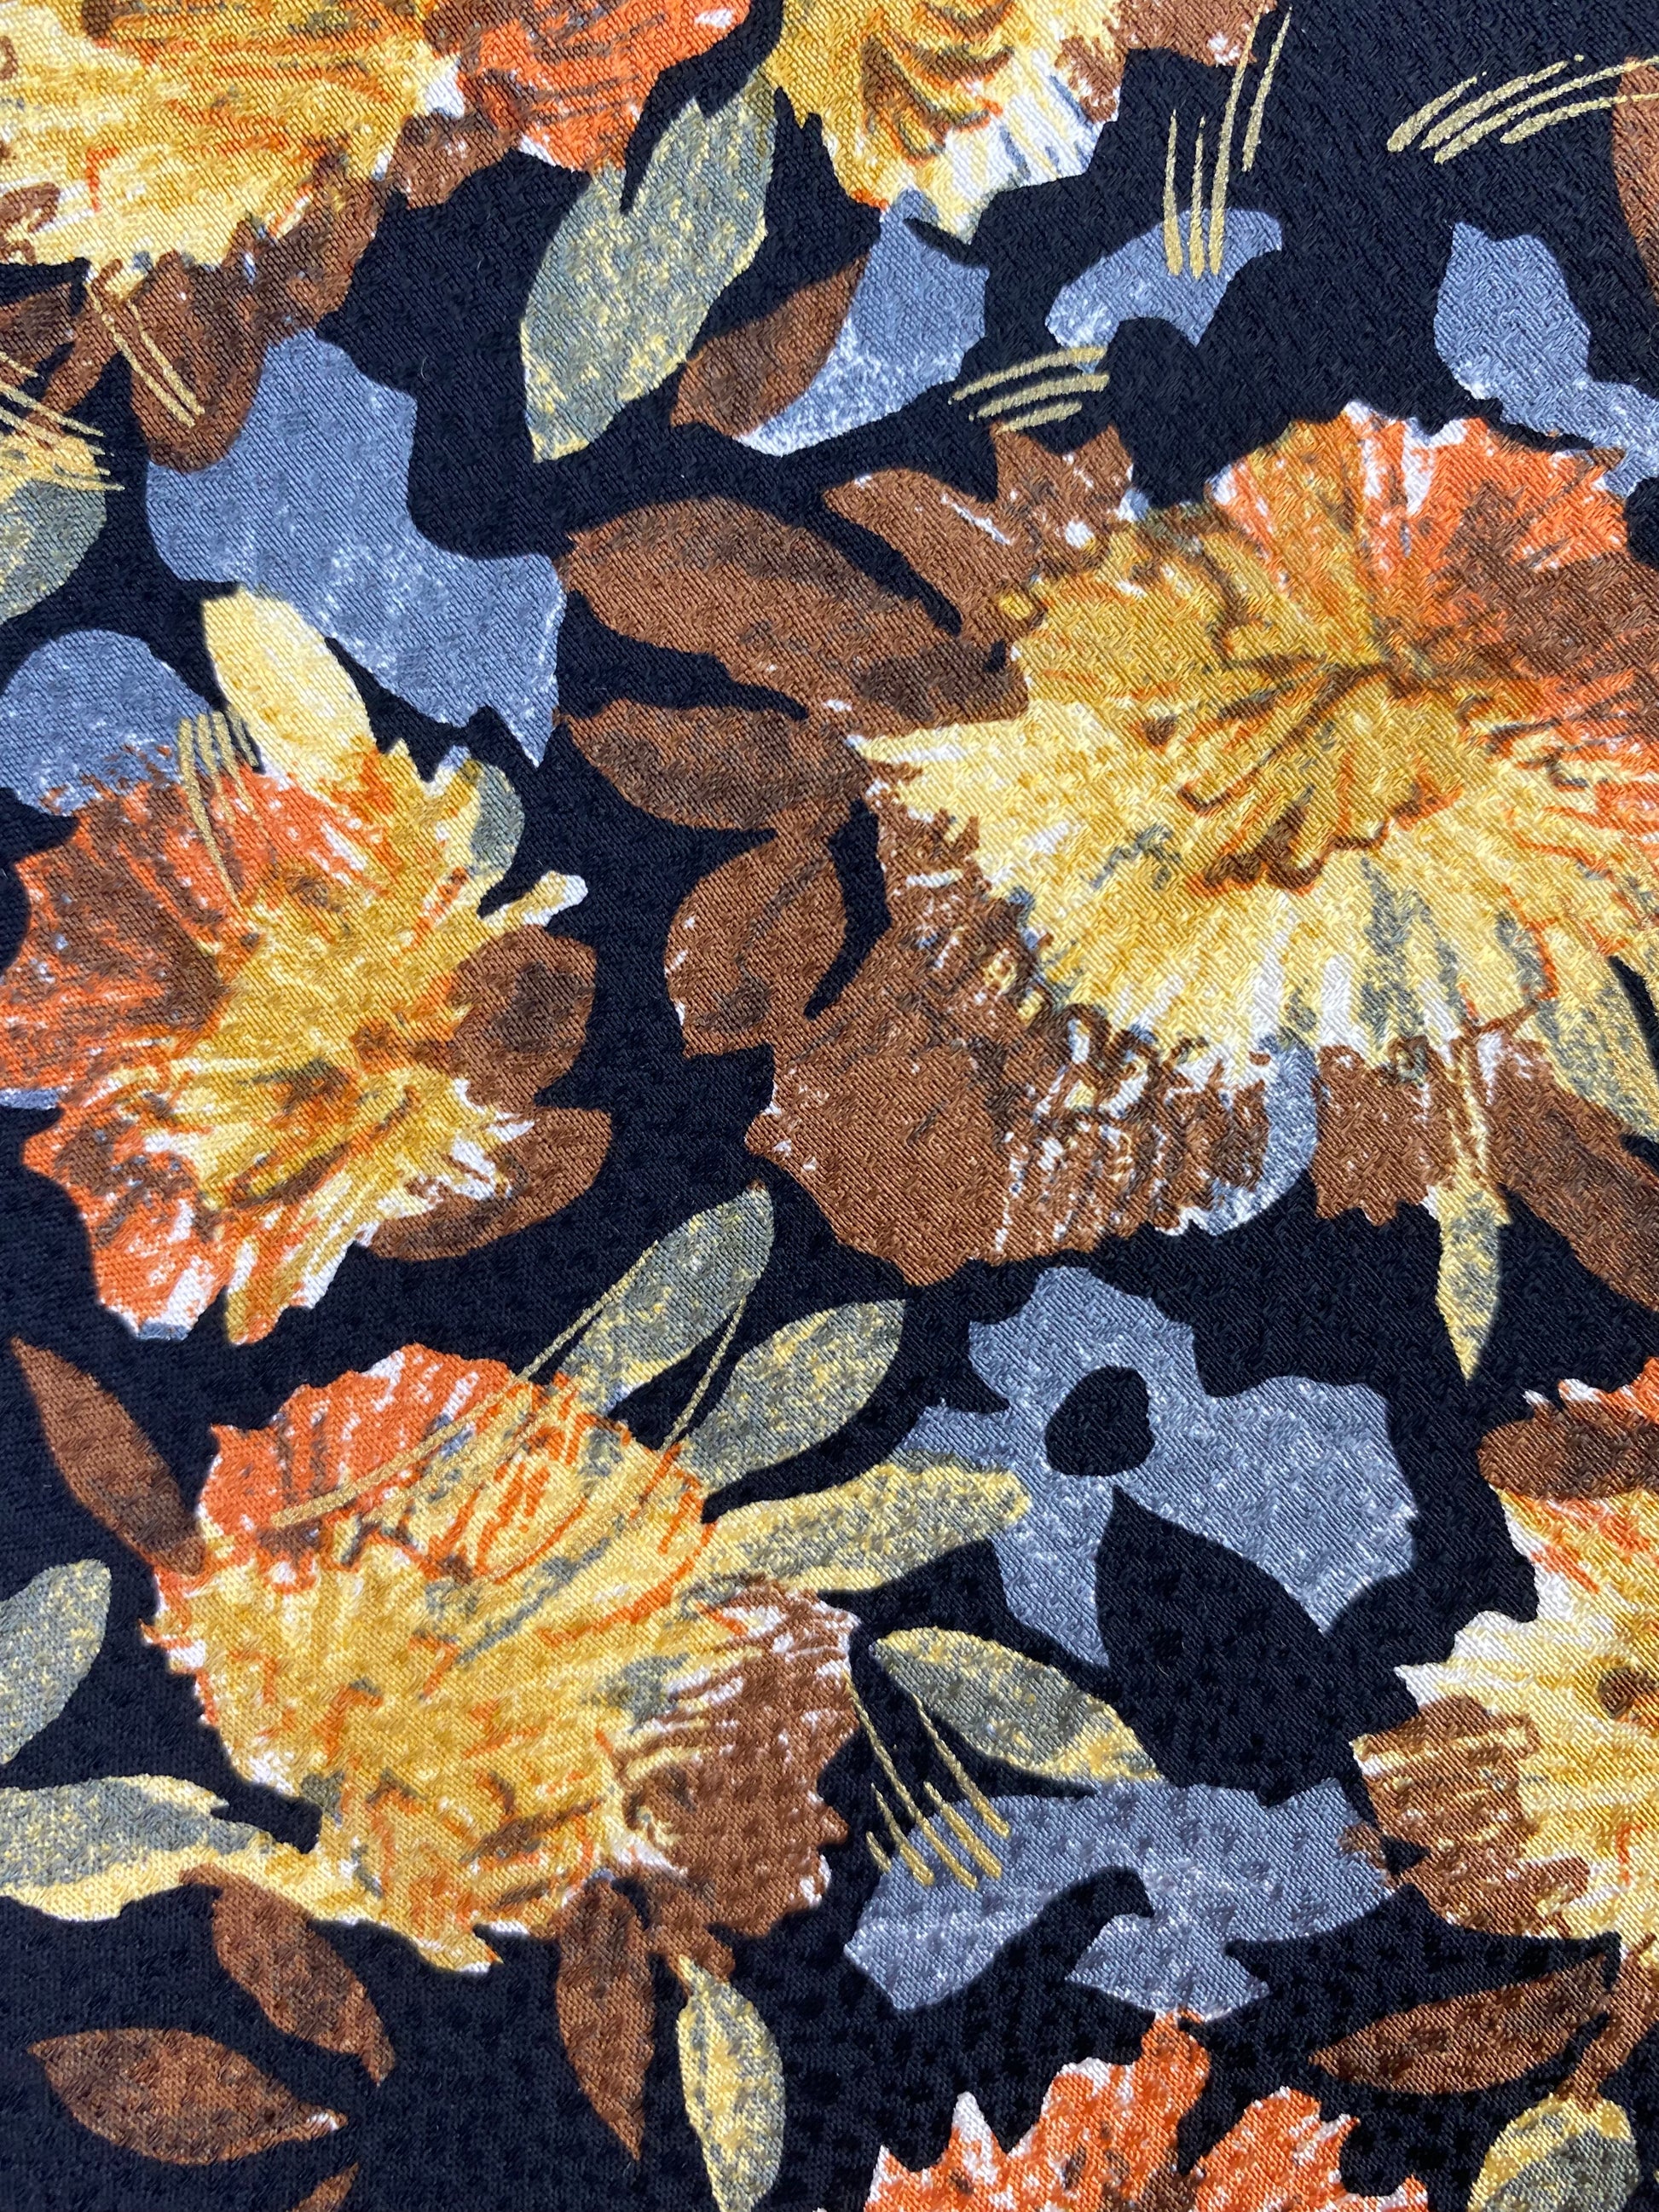 Close-up pattern detail of: 90s Deadstock Silk Necktie, Men's Vintage Gold Blue Floral Pattern Tie, Black Background, NOS